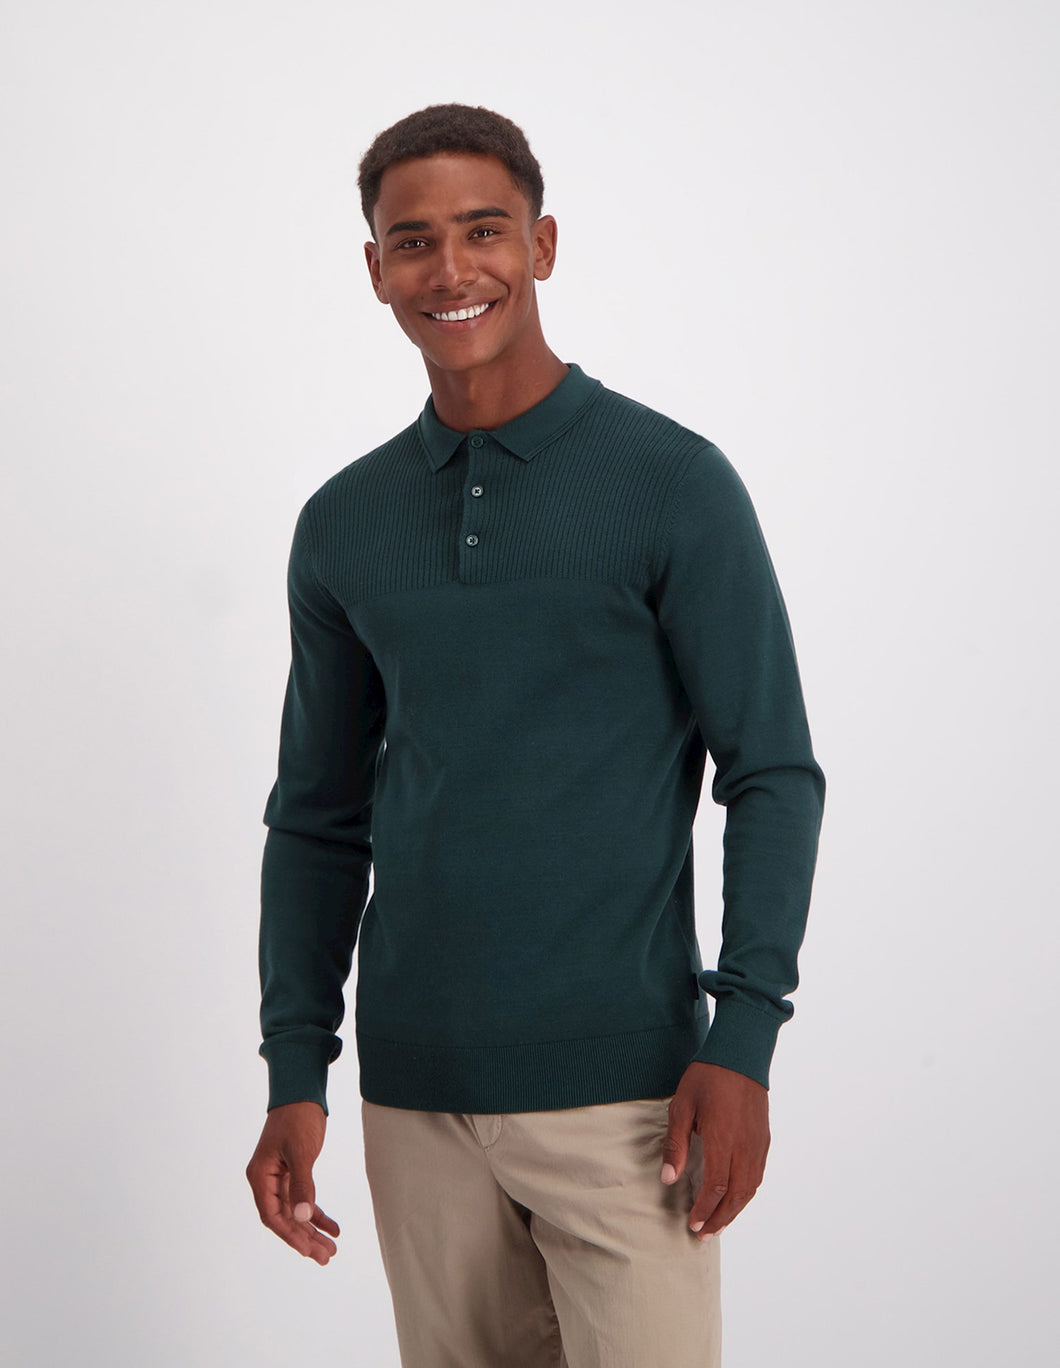 Saint Steve - Lambert Knitted Polo Long Sleeve Green